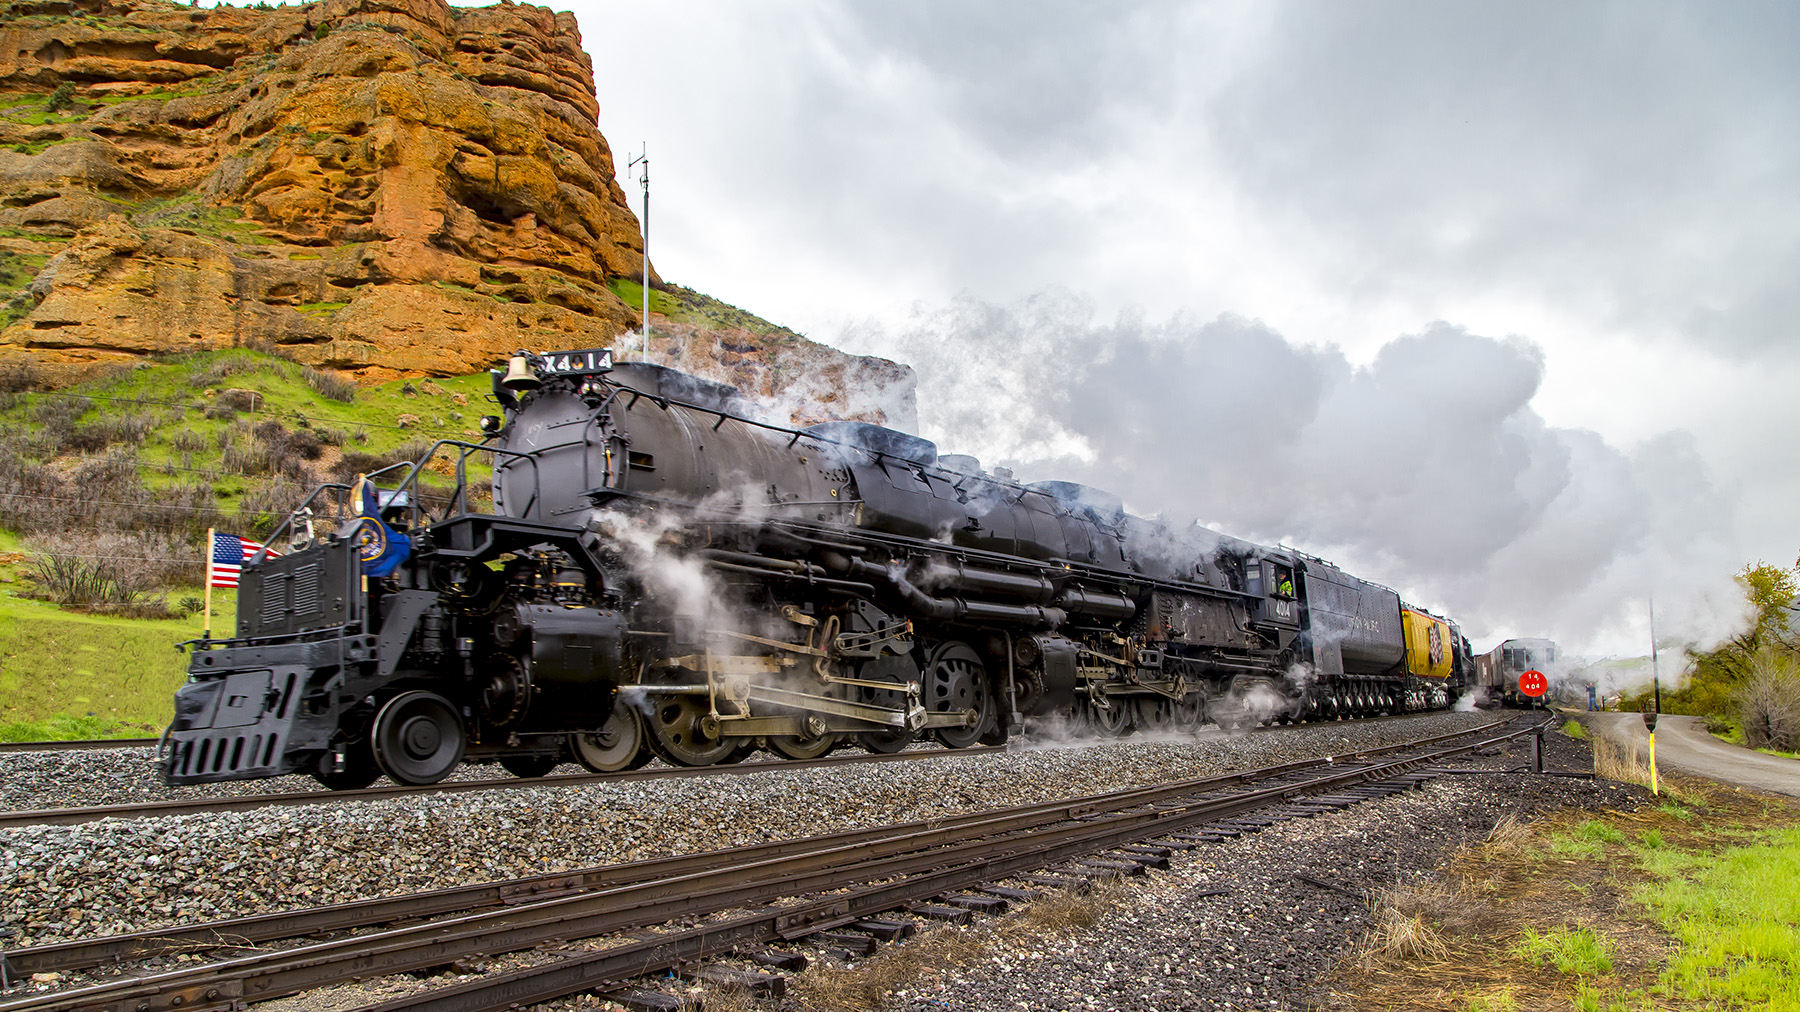 Union Pacific’s “Big Boy” Steam Locomotive No. 4014 to Travel through Gurnee on Friday, July 26th, 2019